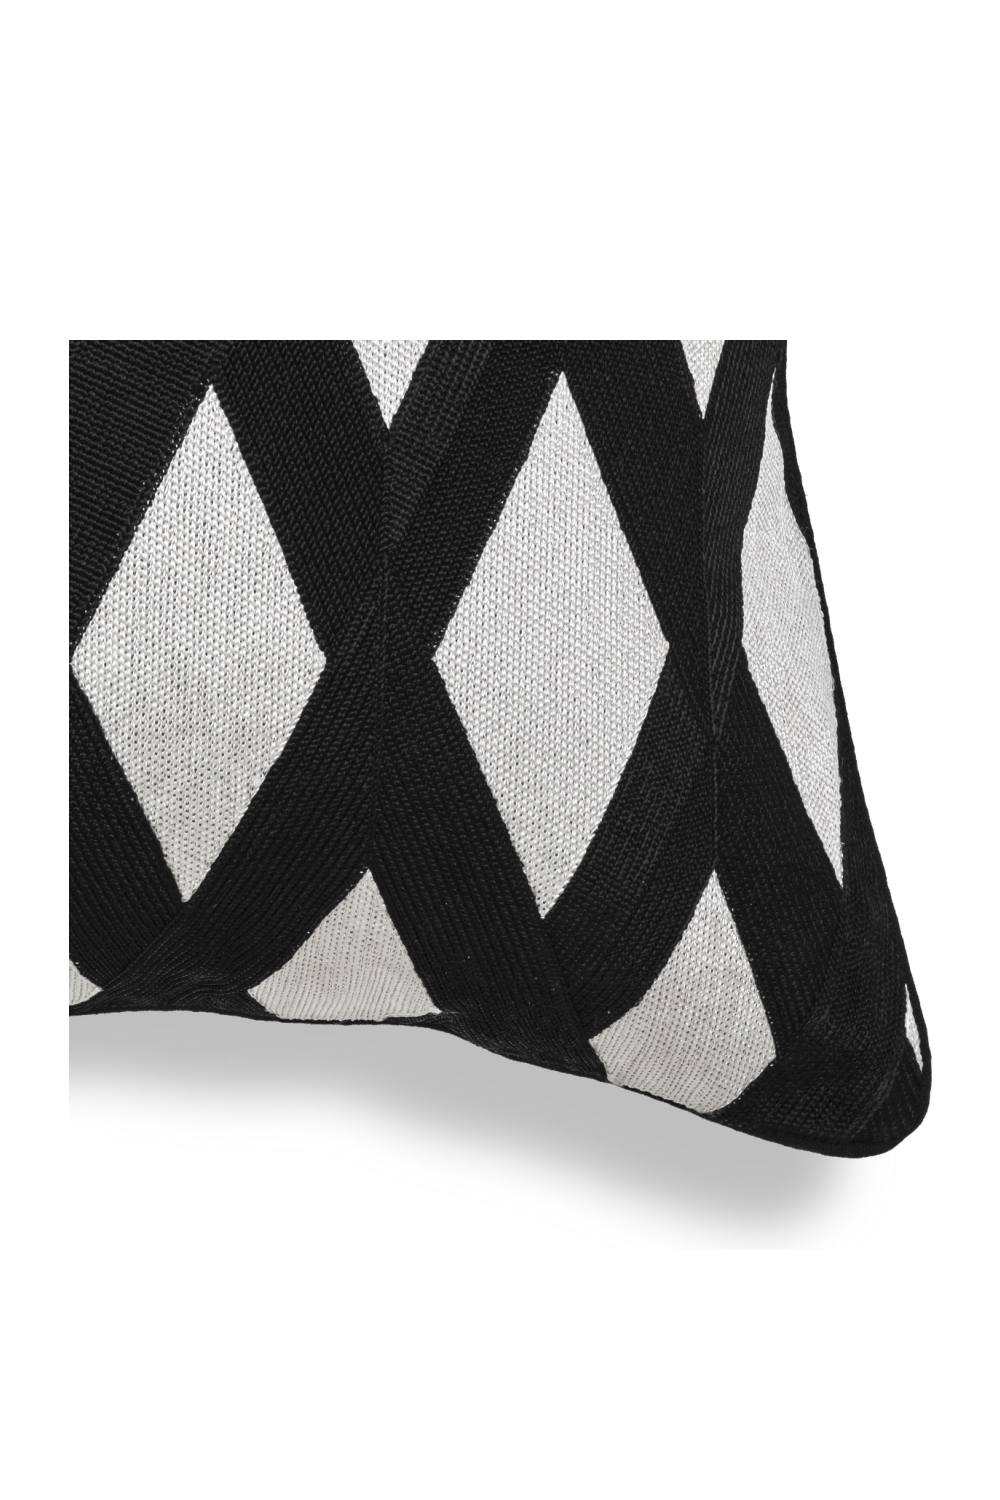 Diamond Pattern Square Pillow | Eichholtz Splender | Oroa.com